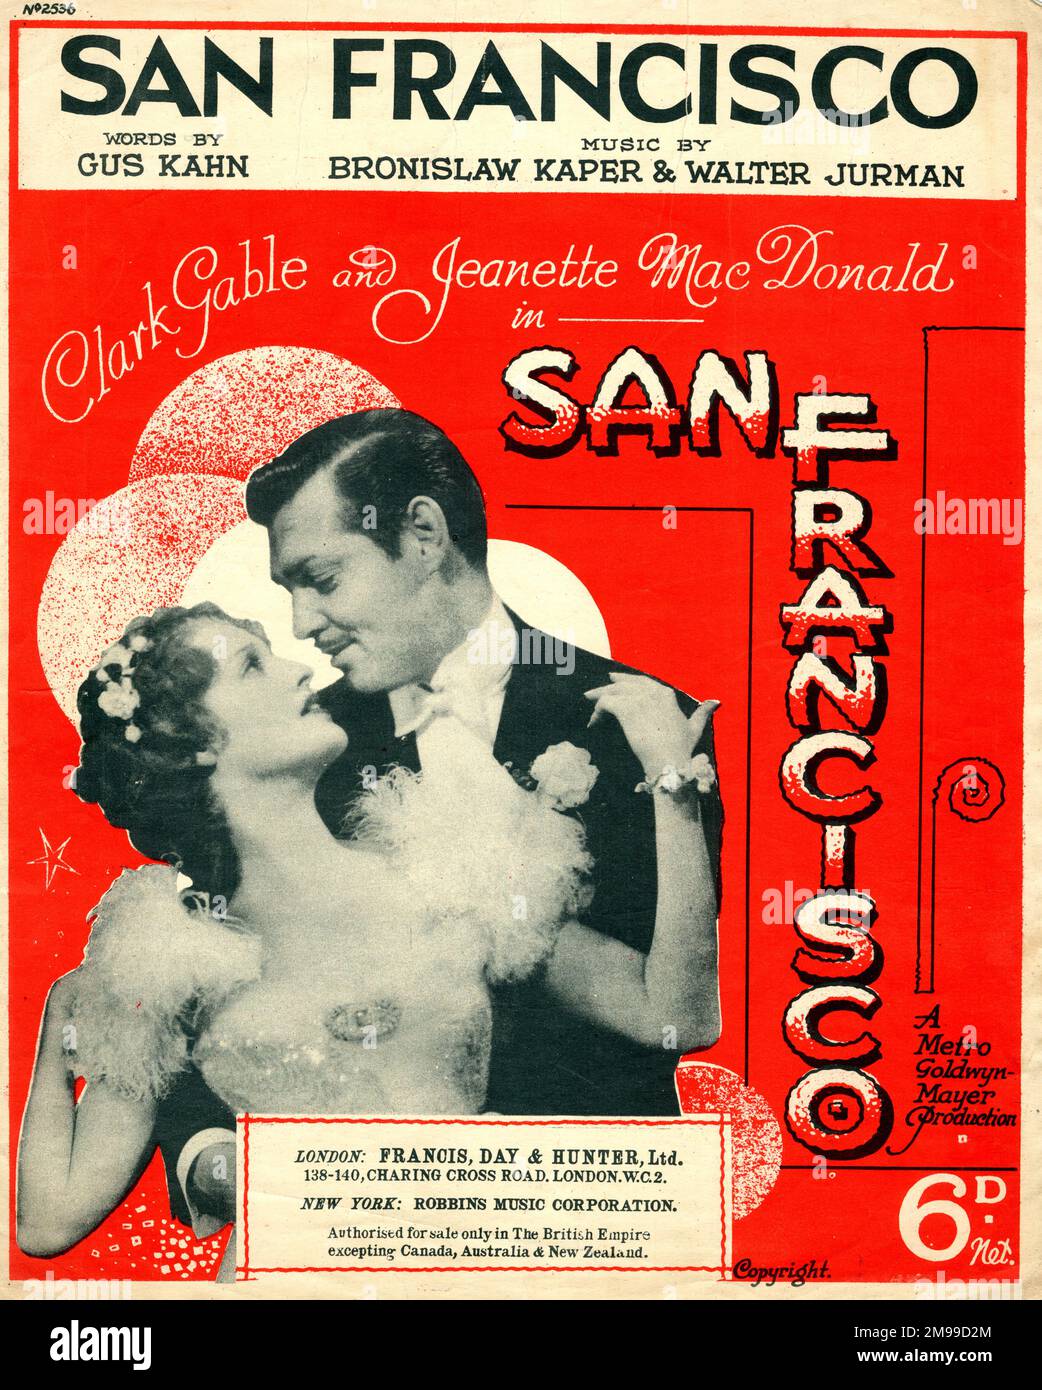 Couverture musicale, Clark Gable et Jeanette MacDonald à San Francisco, Words by Gus Kahn, Music by Kaper and Jurman. Banque D'Images